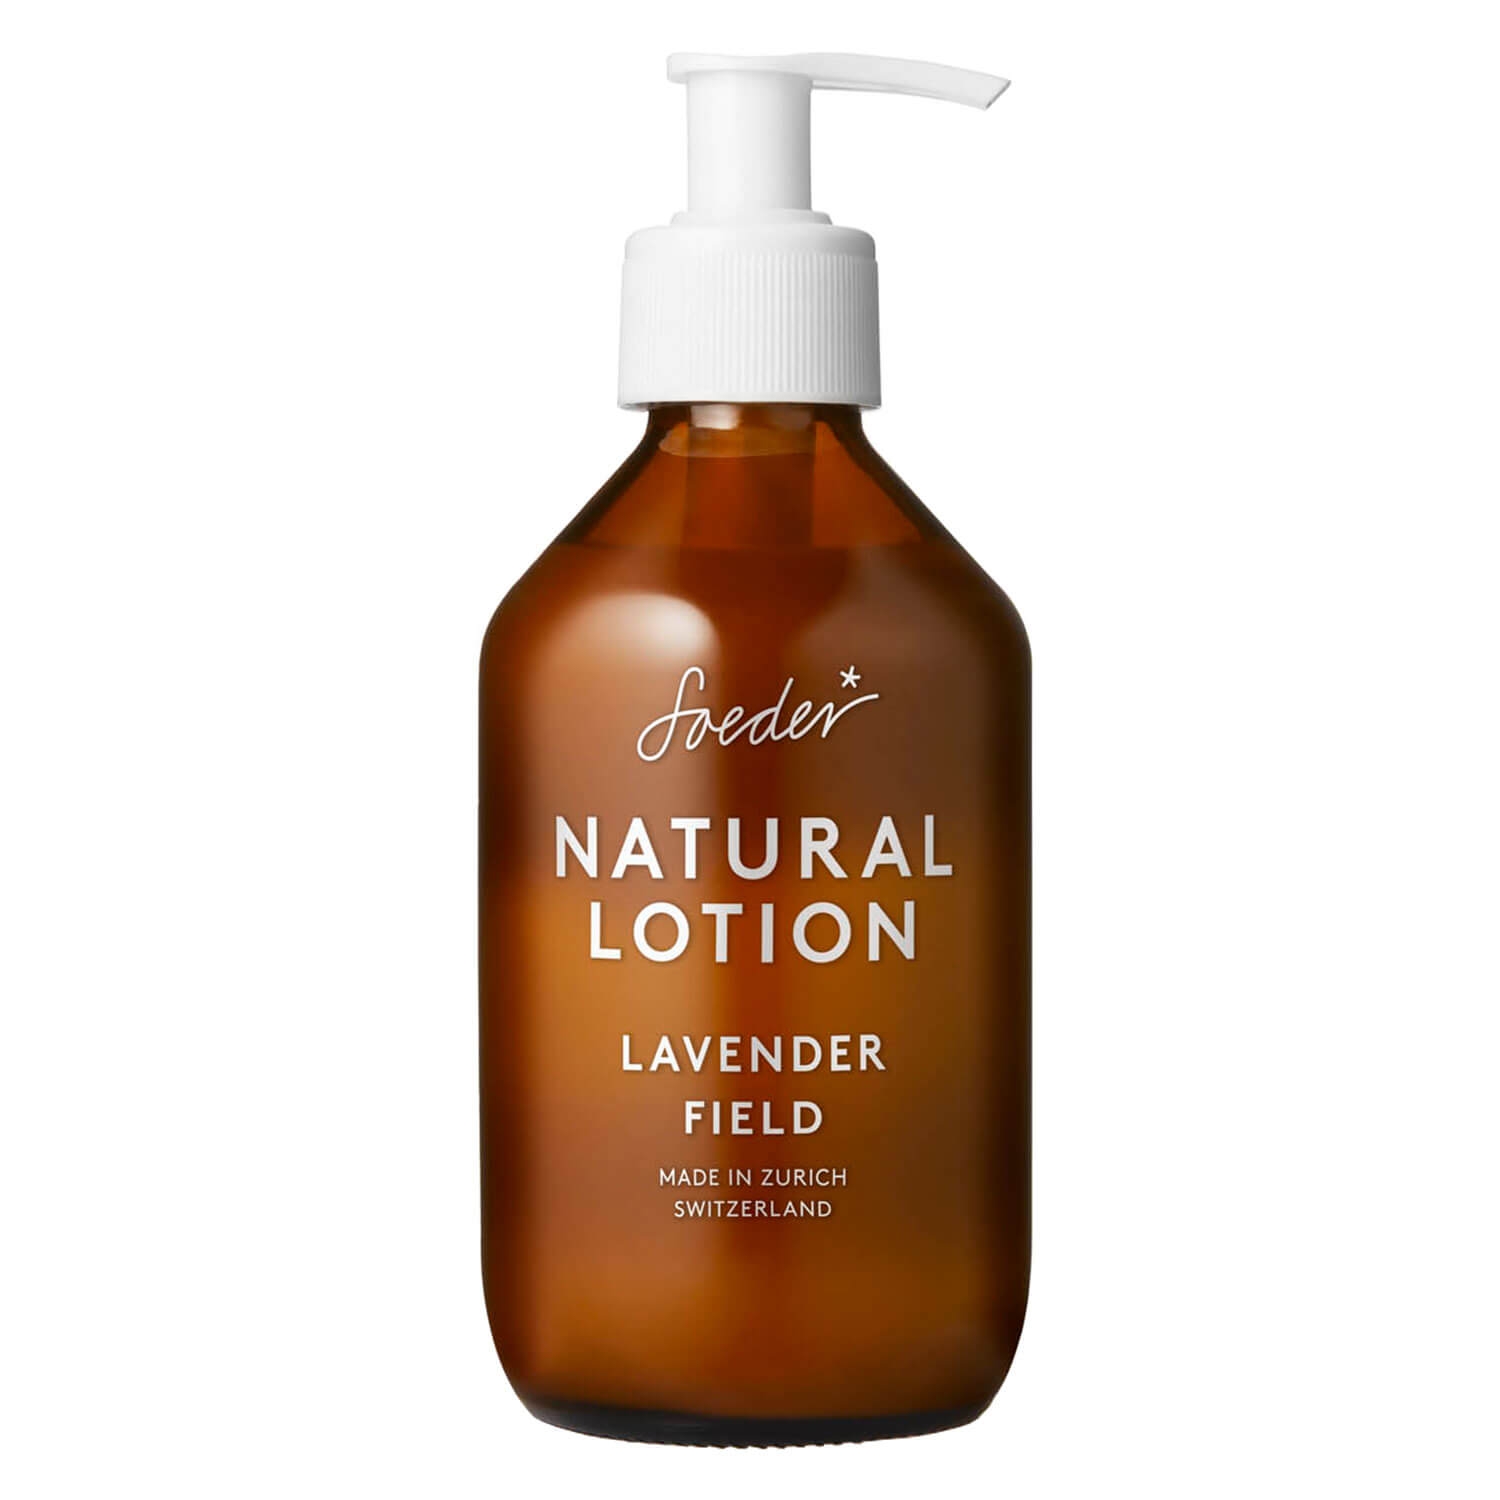 Produktbild von Soeder - Natural Lotion Lavender Field